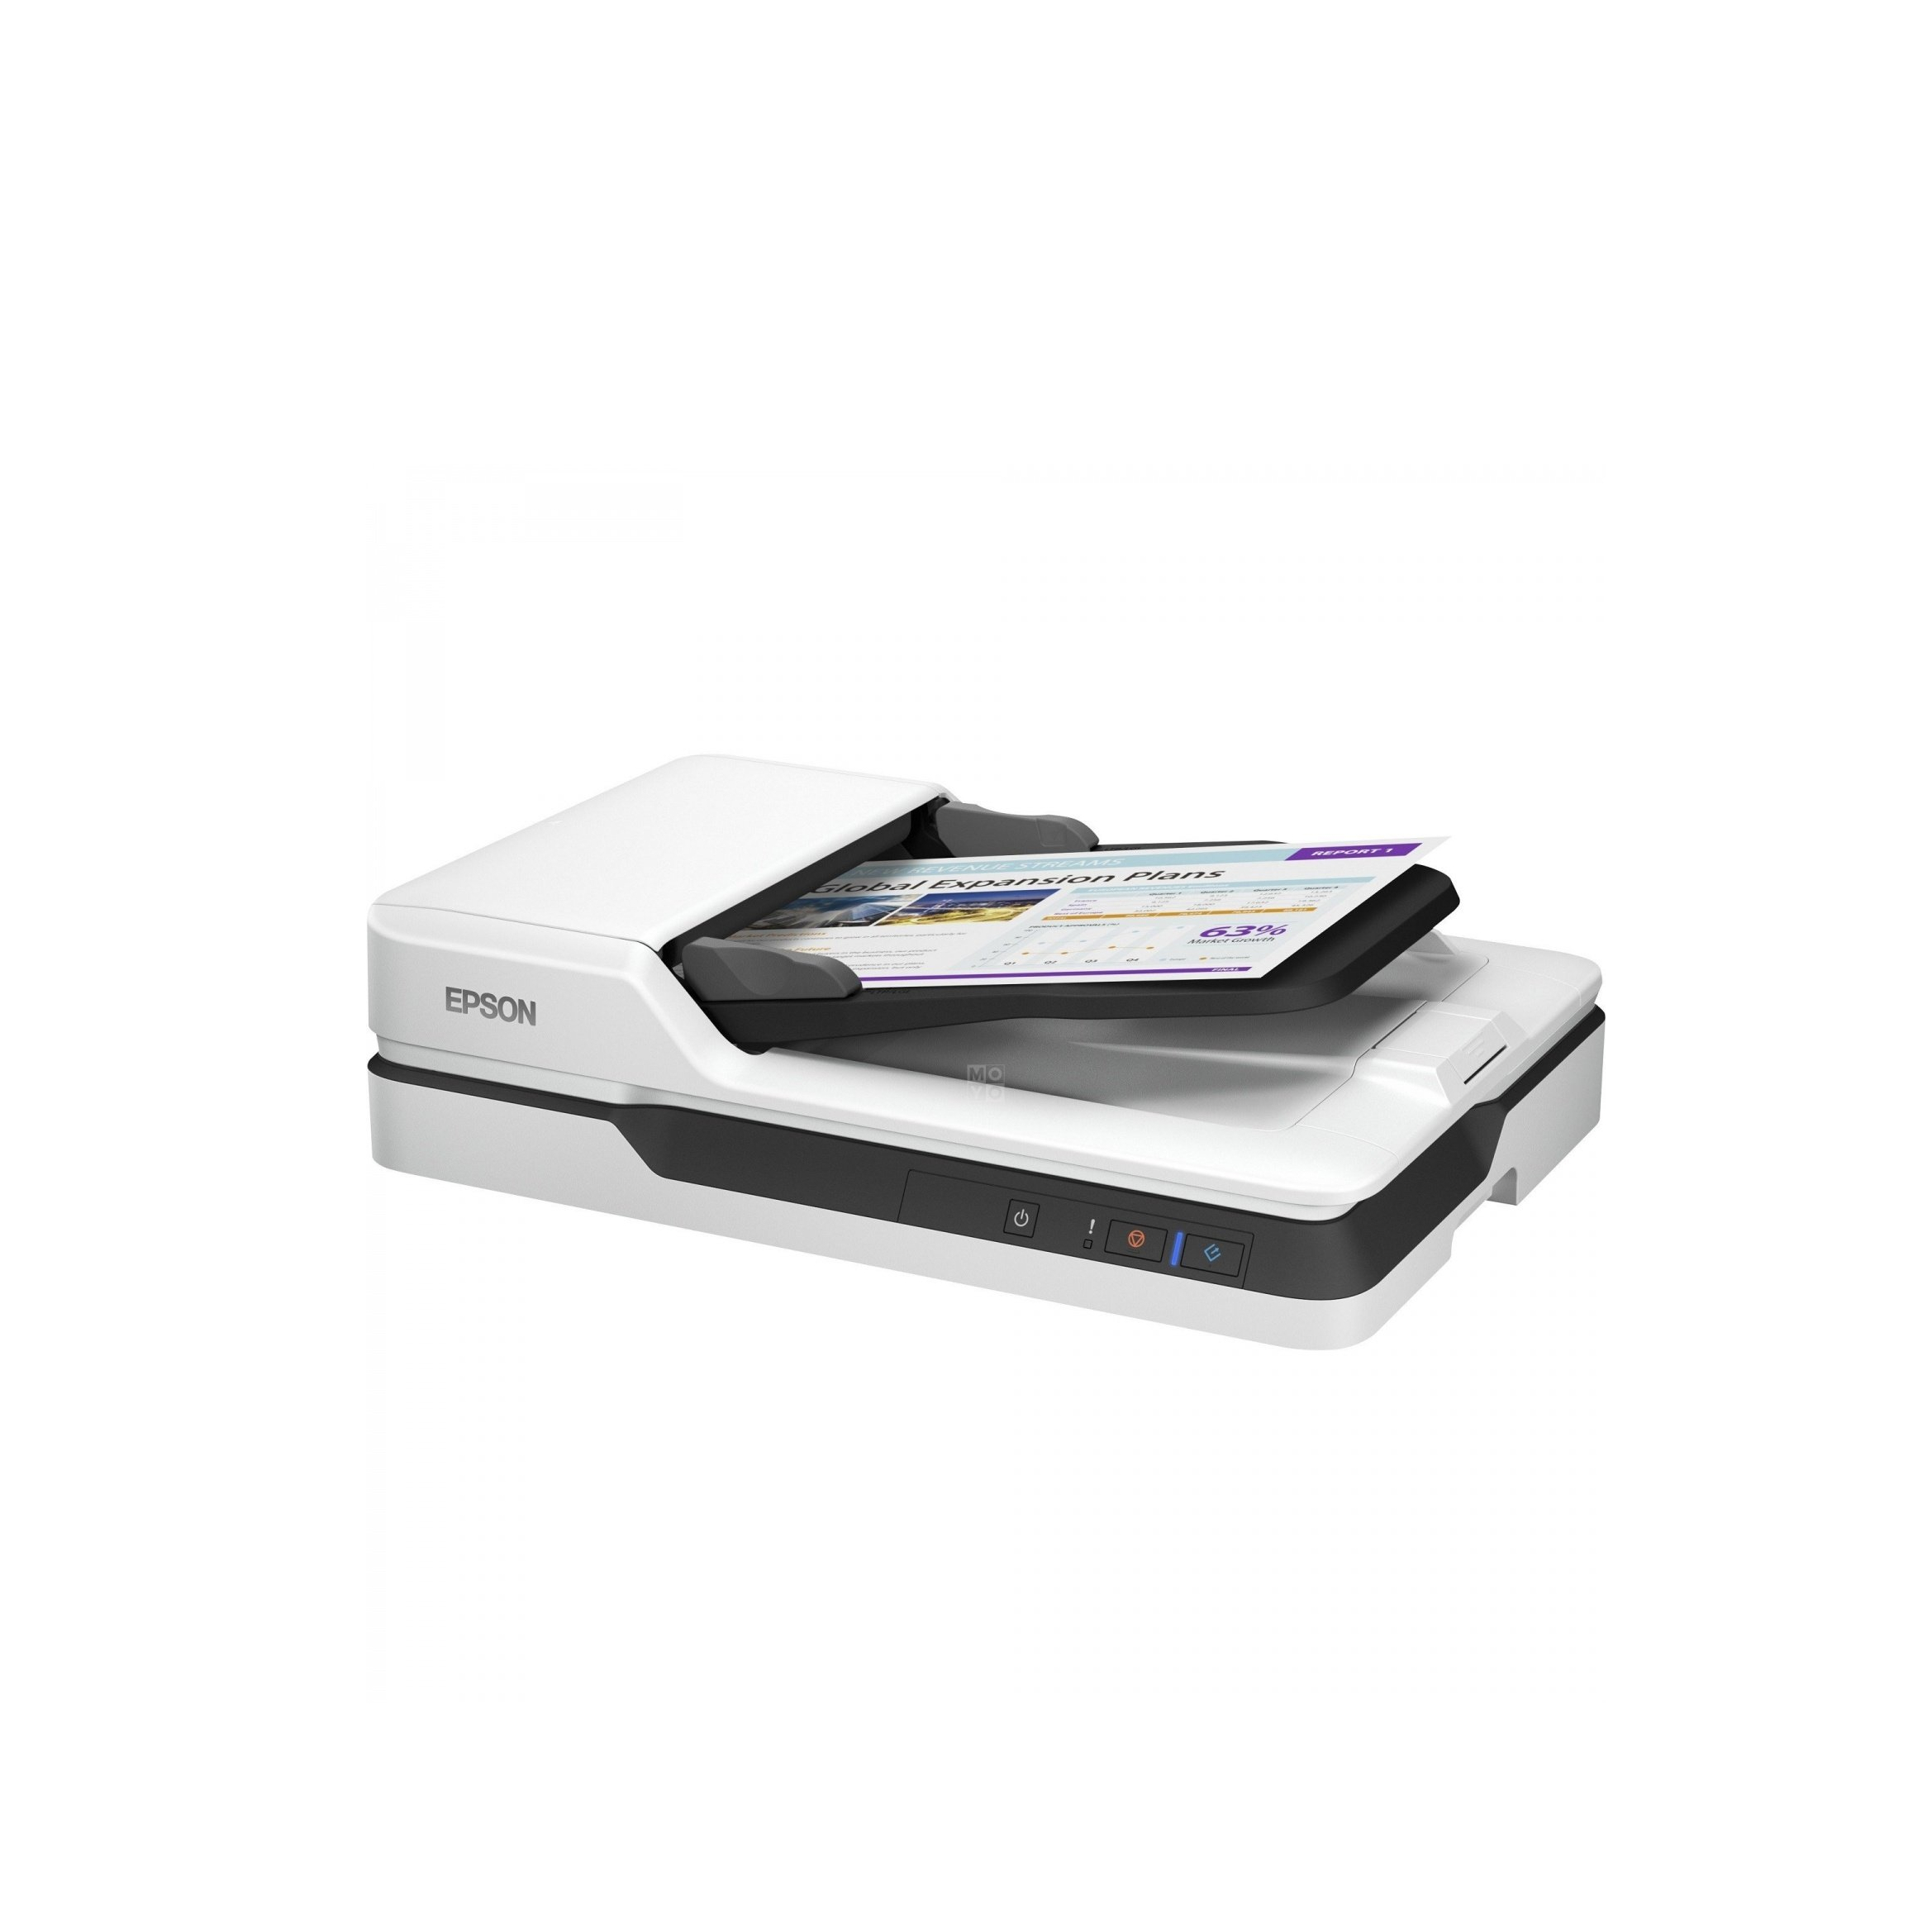 Планшетный сканер WorkForce DS-1630 B11B239401